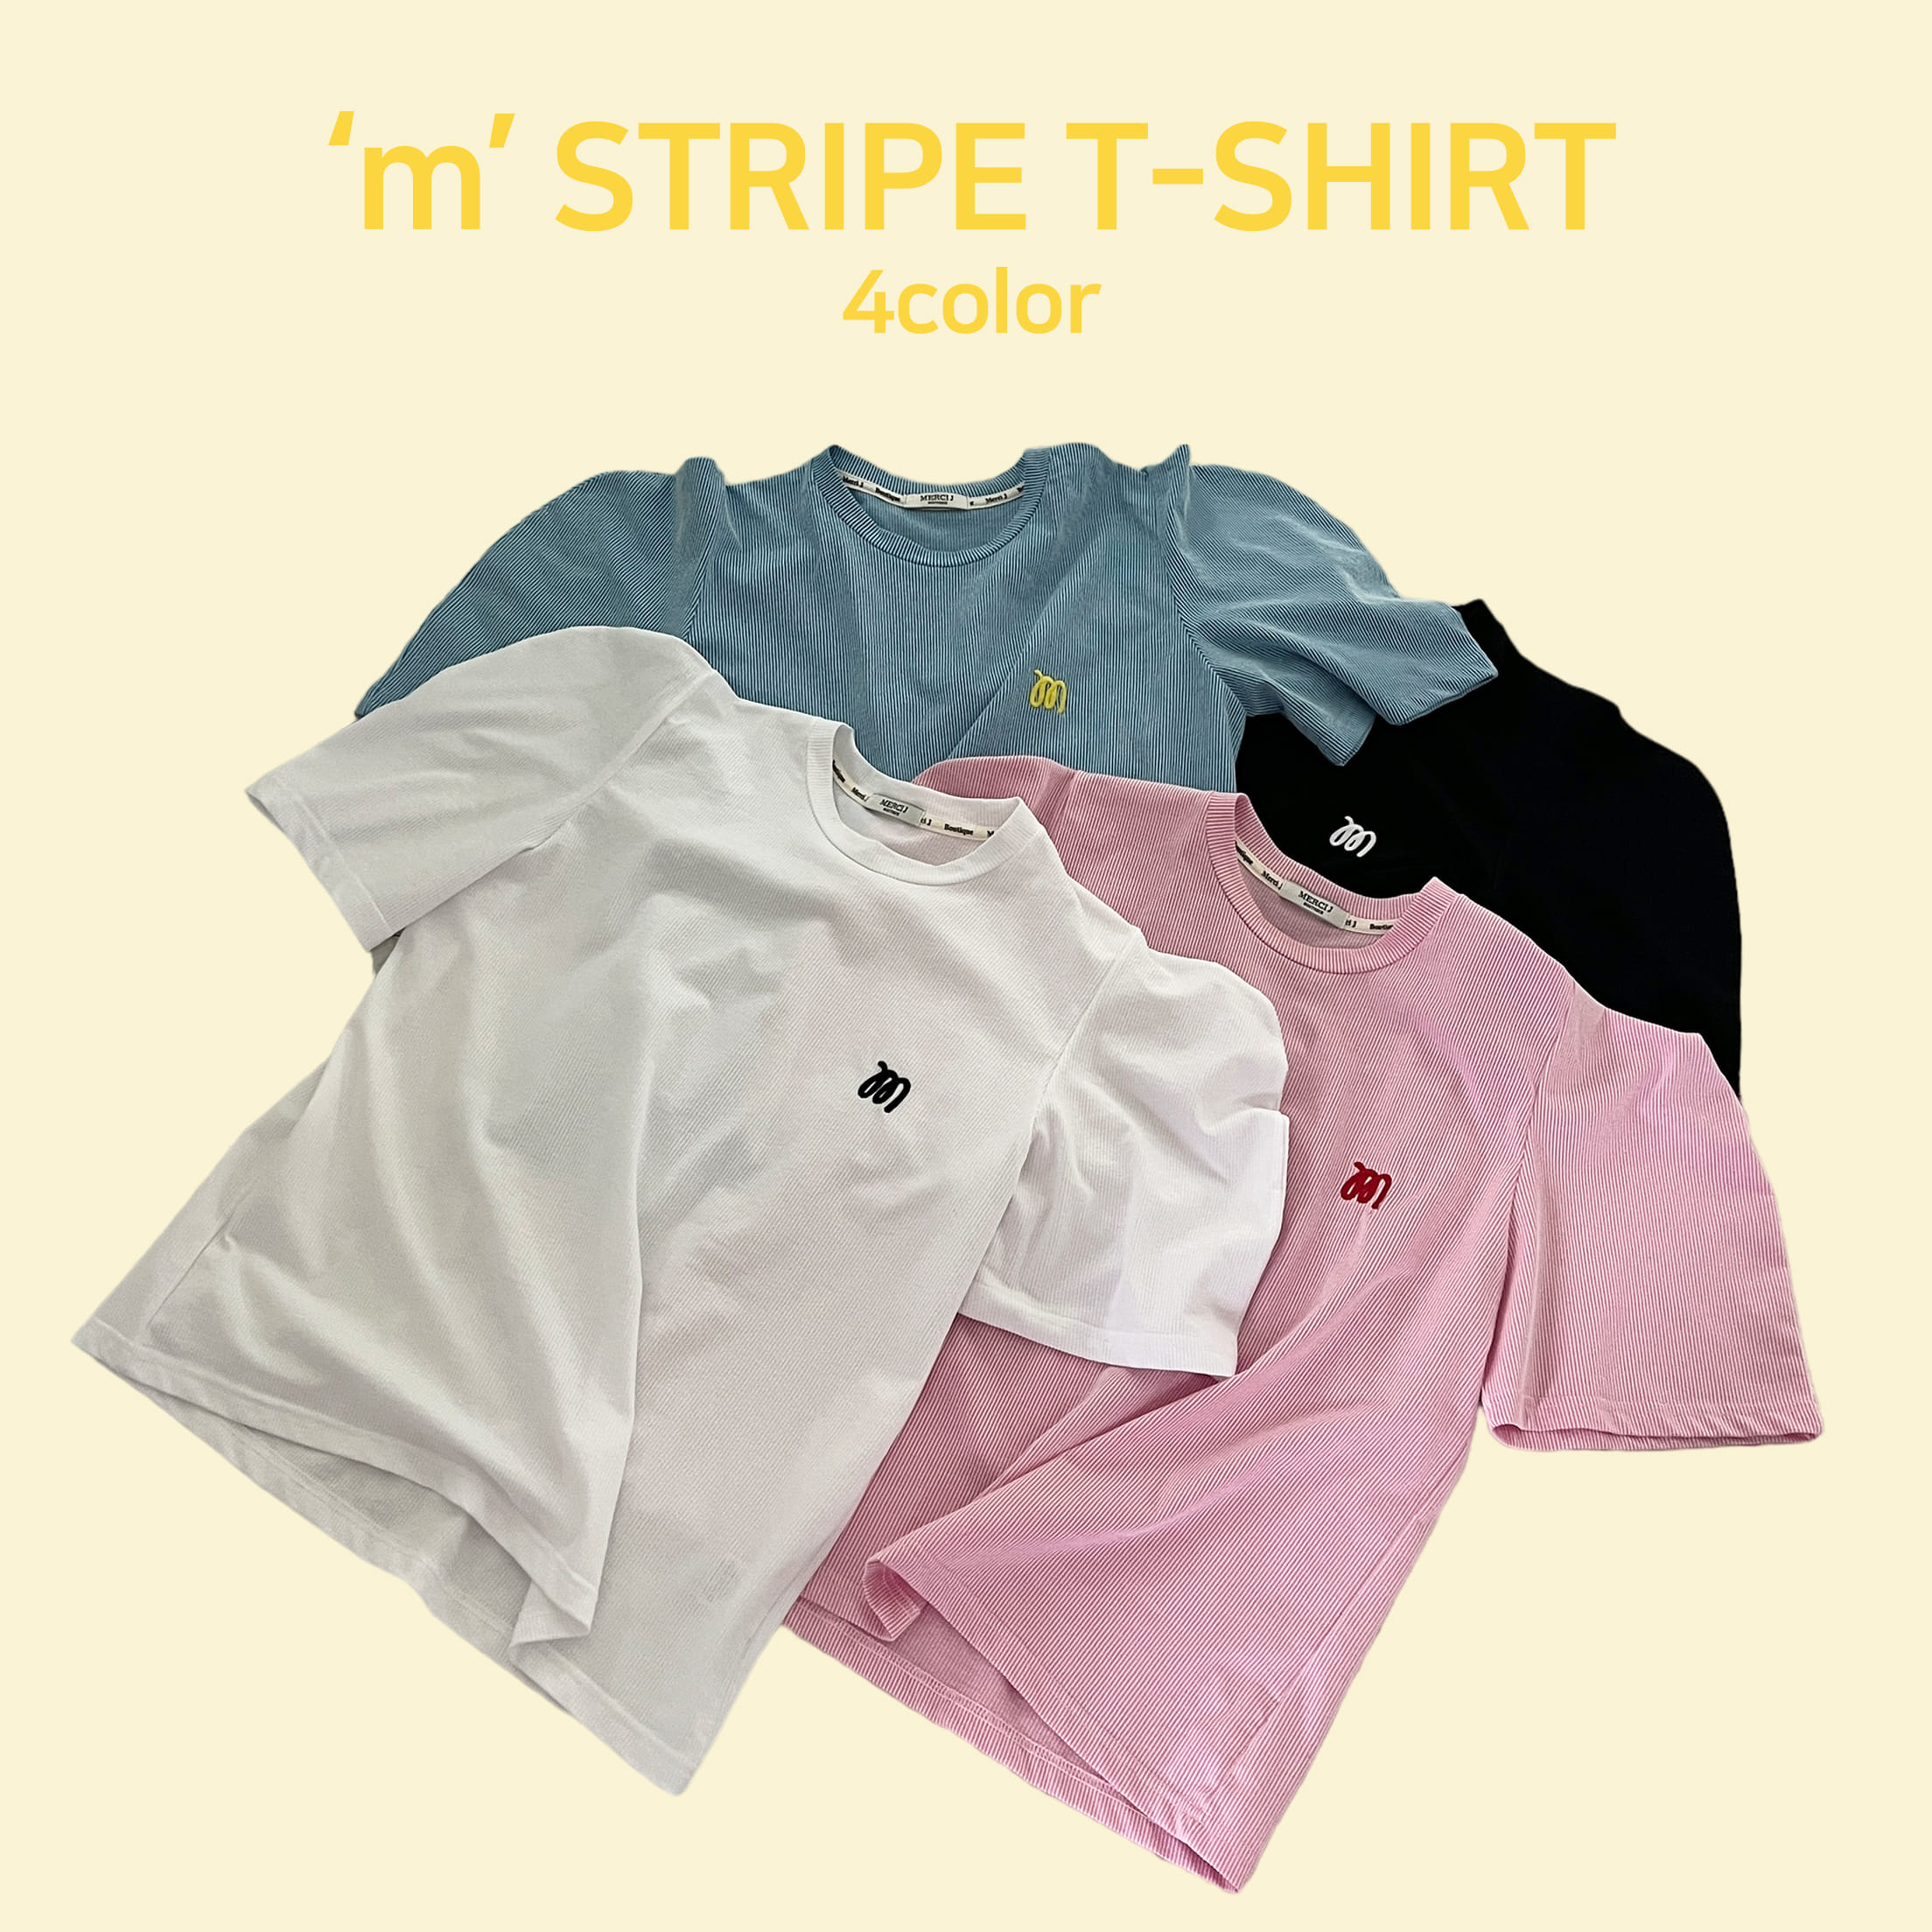 MERCI-1500 슈아 엠자수 스트라이프 티셔츠 [4color]